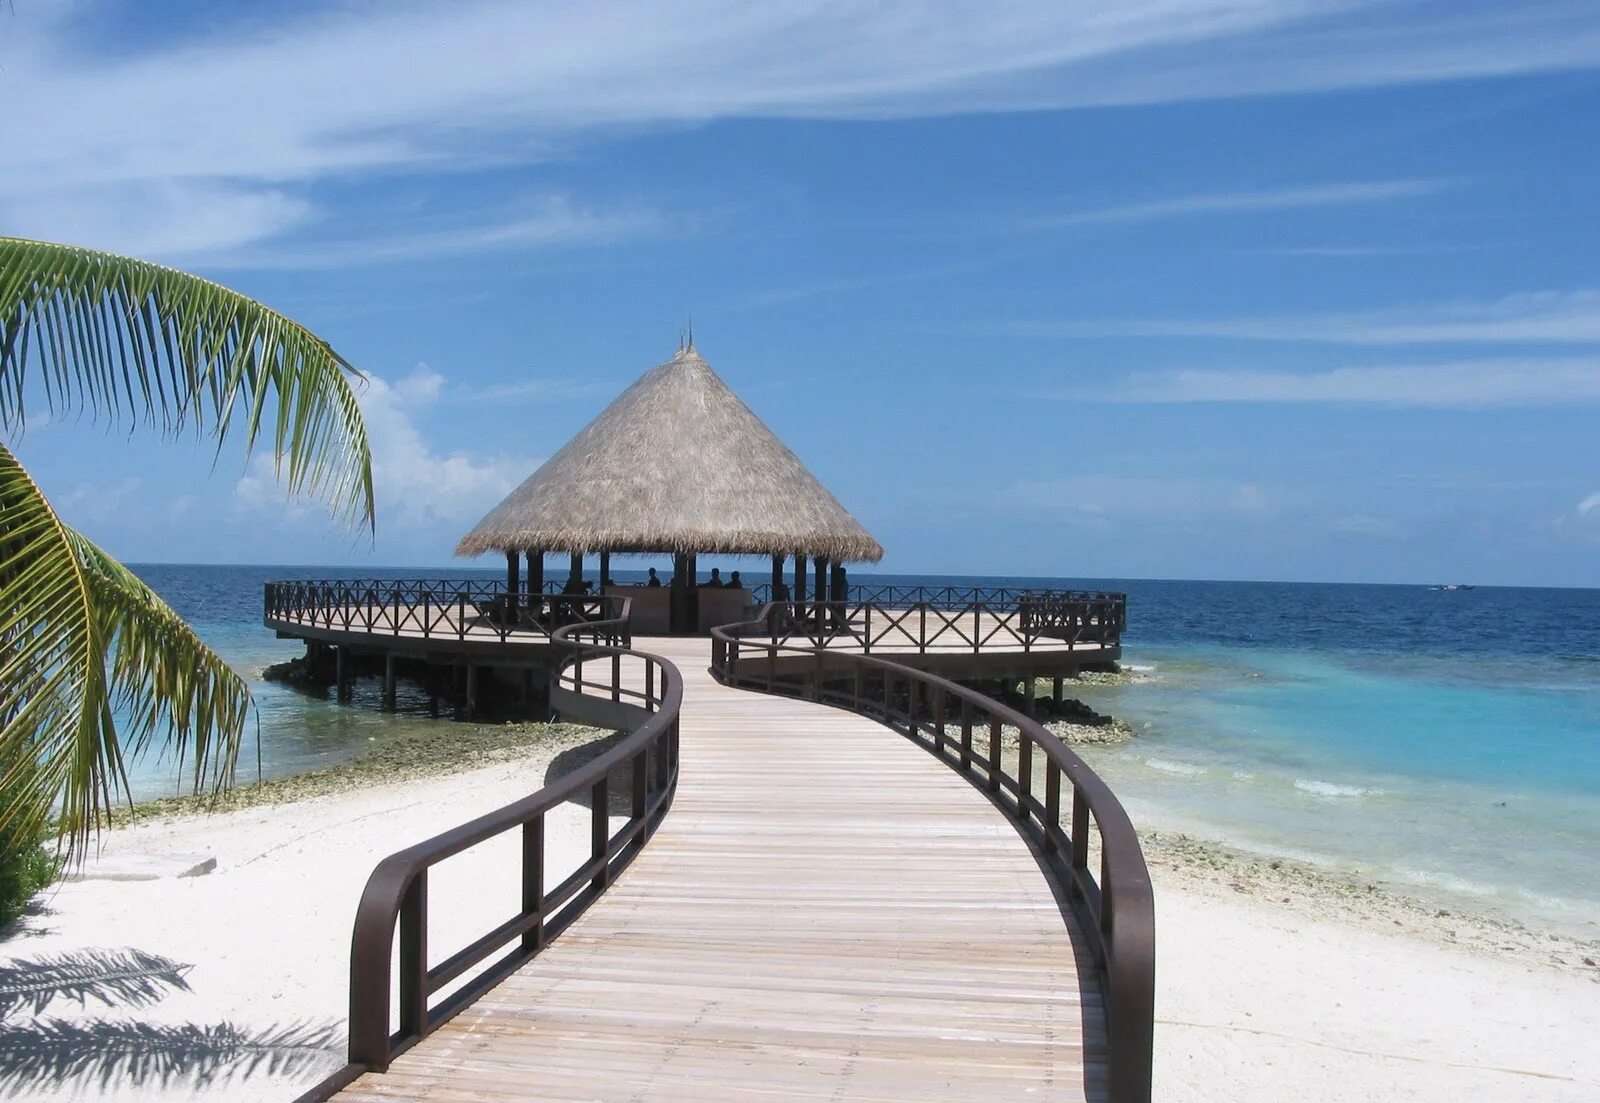 Bandos Maldives 4. Мальдивы Bandos. Bandos Island Resort 4*. Bandos Island Resort & Spa. Bandos island